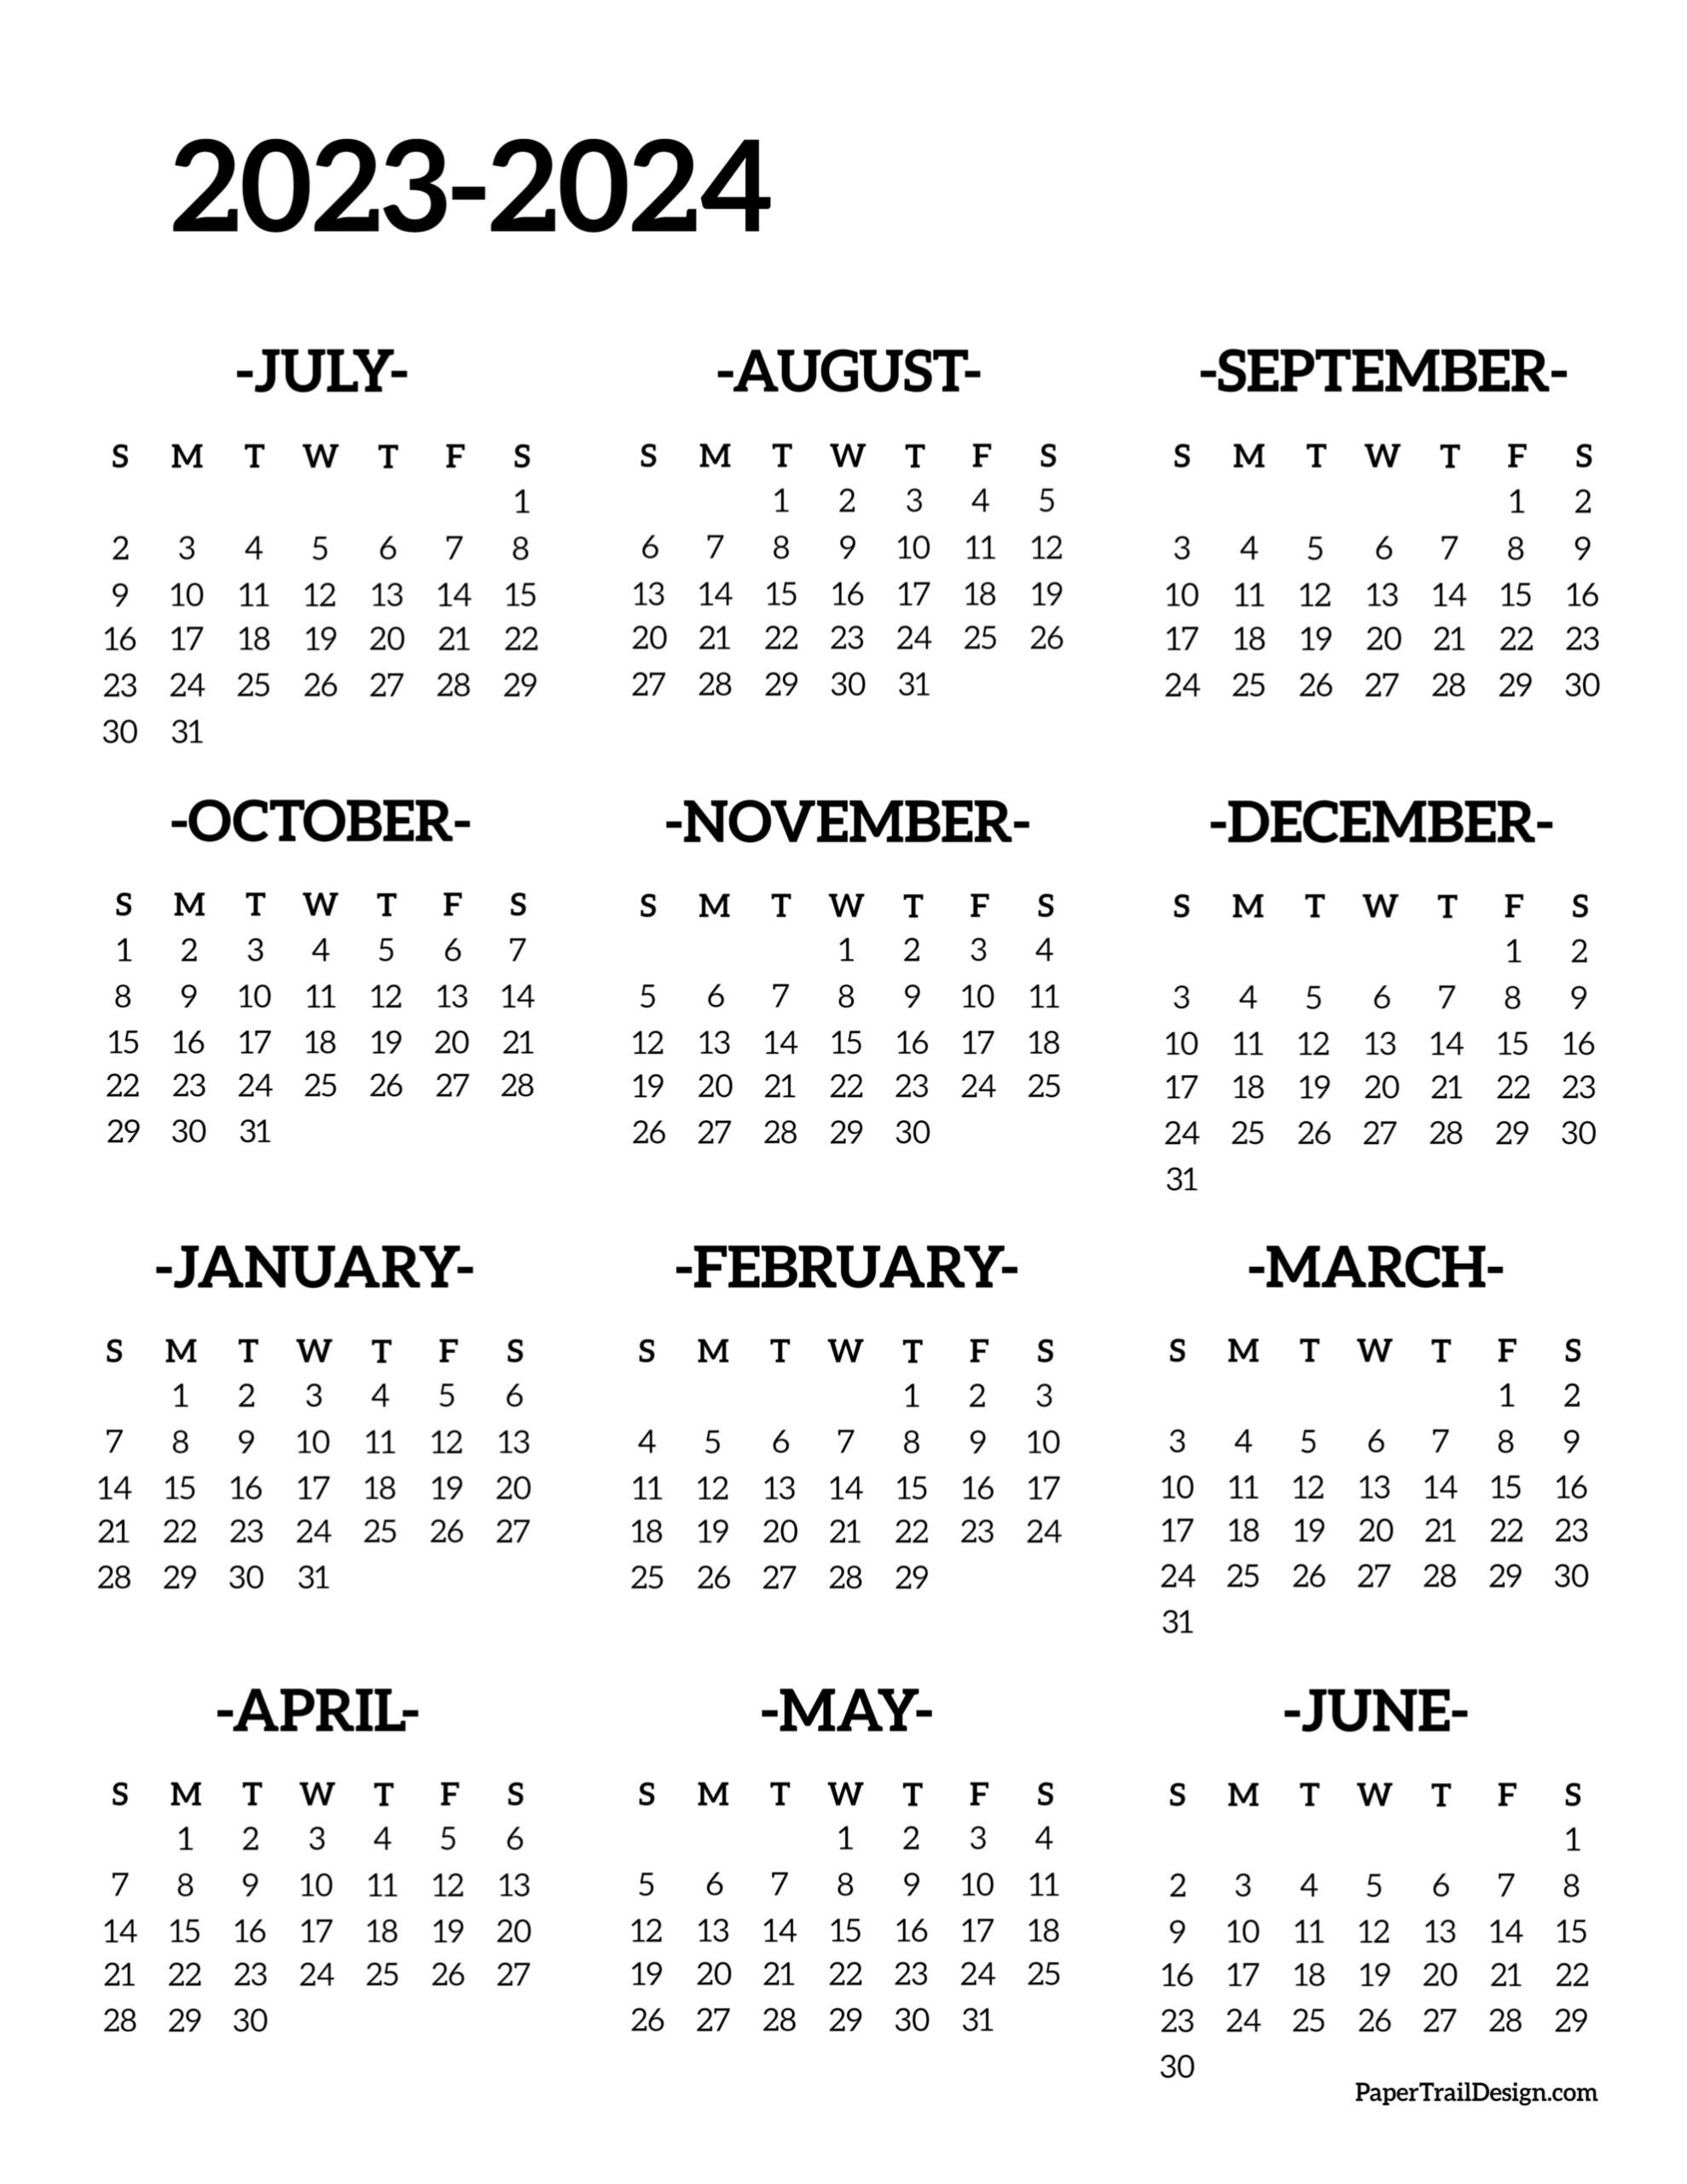 2023-2024 School Year Calendar Free Printable - Paper Trail Design for 2023-2024 Printable Calendar